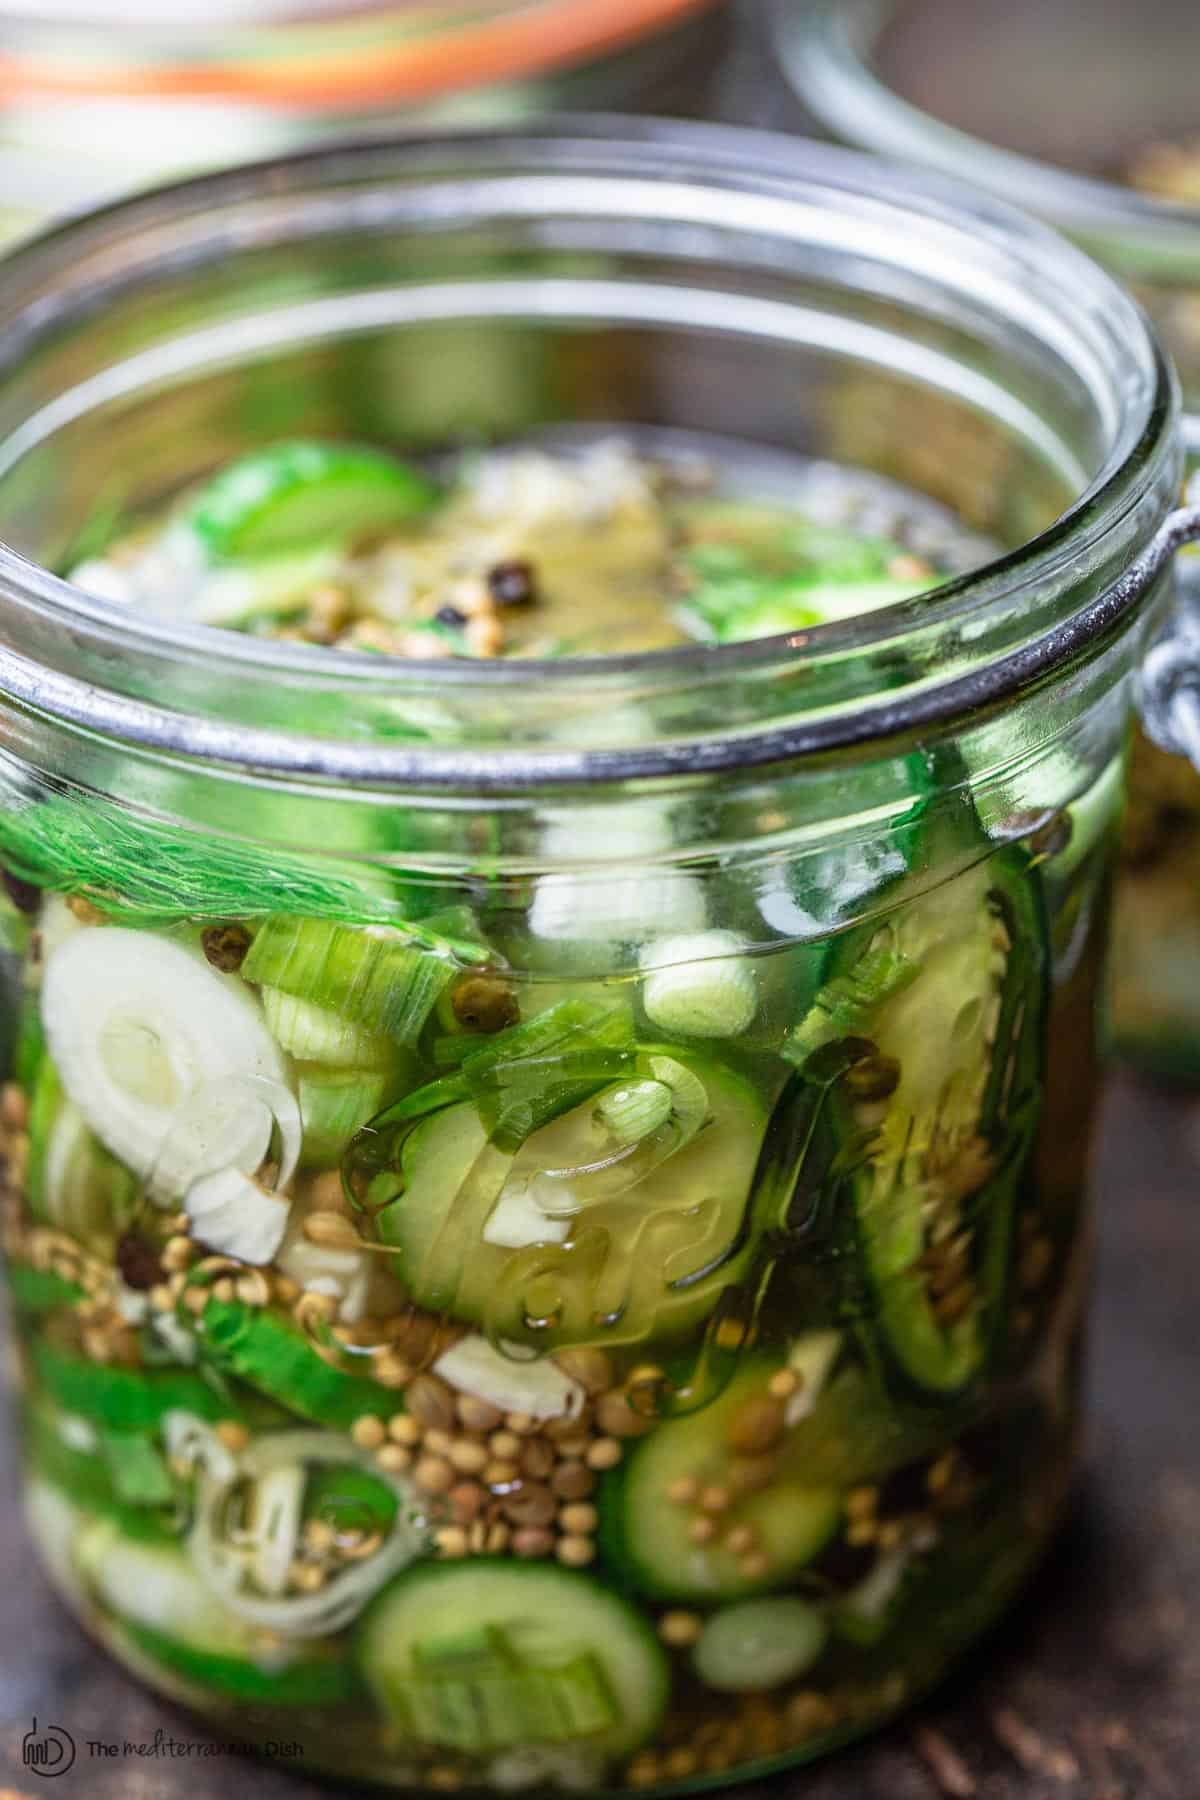 https://www.themediterraneandish.com/wp-content/uploads/2020/08/quick-pickled-cucumber-recipe-7.jpg